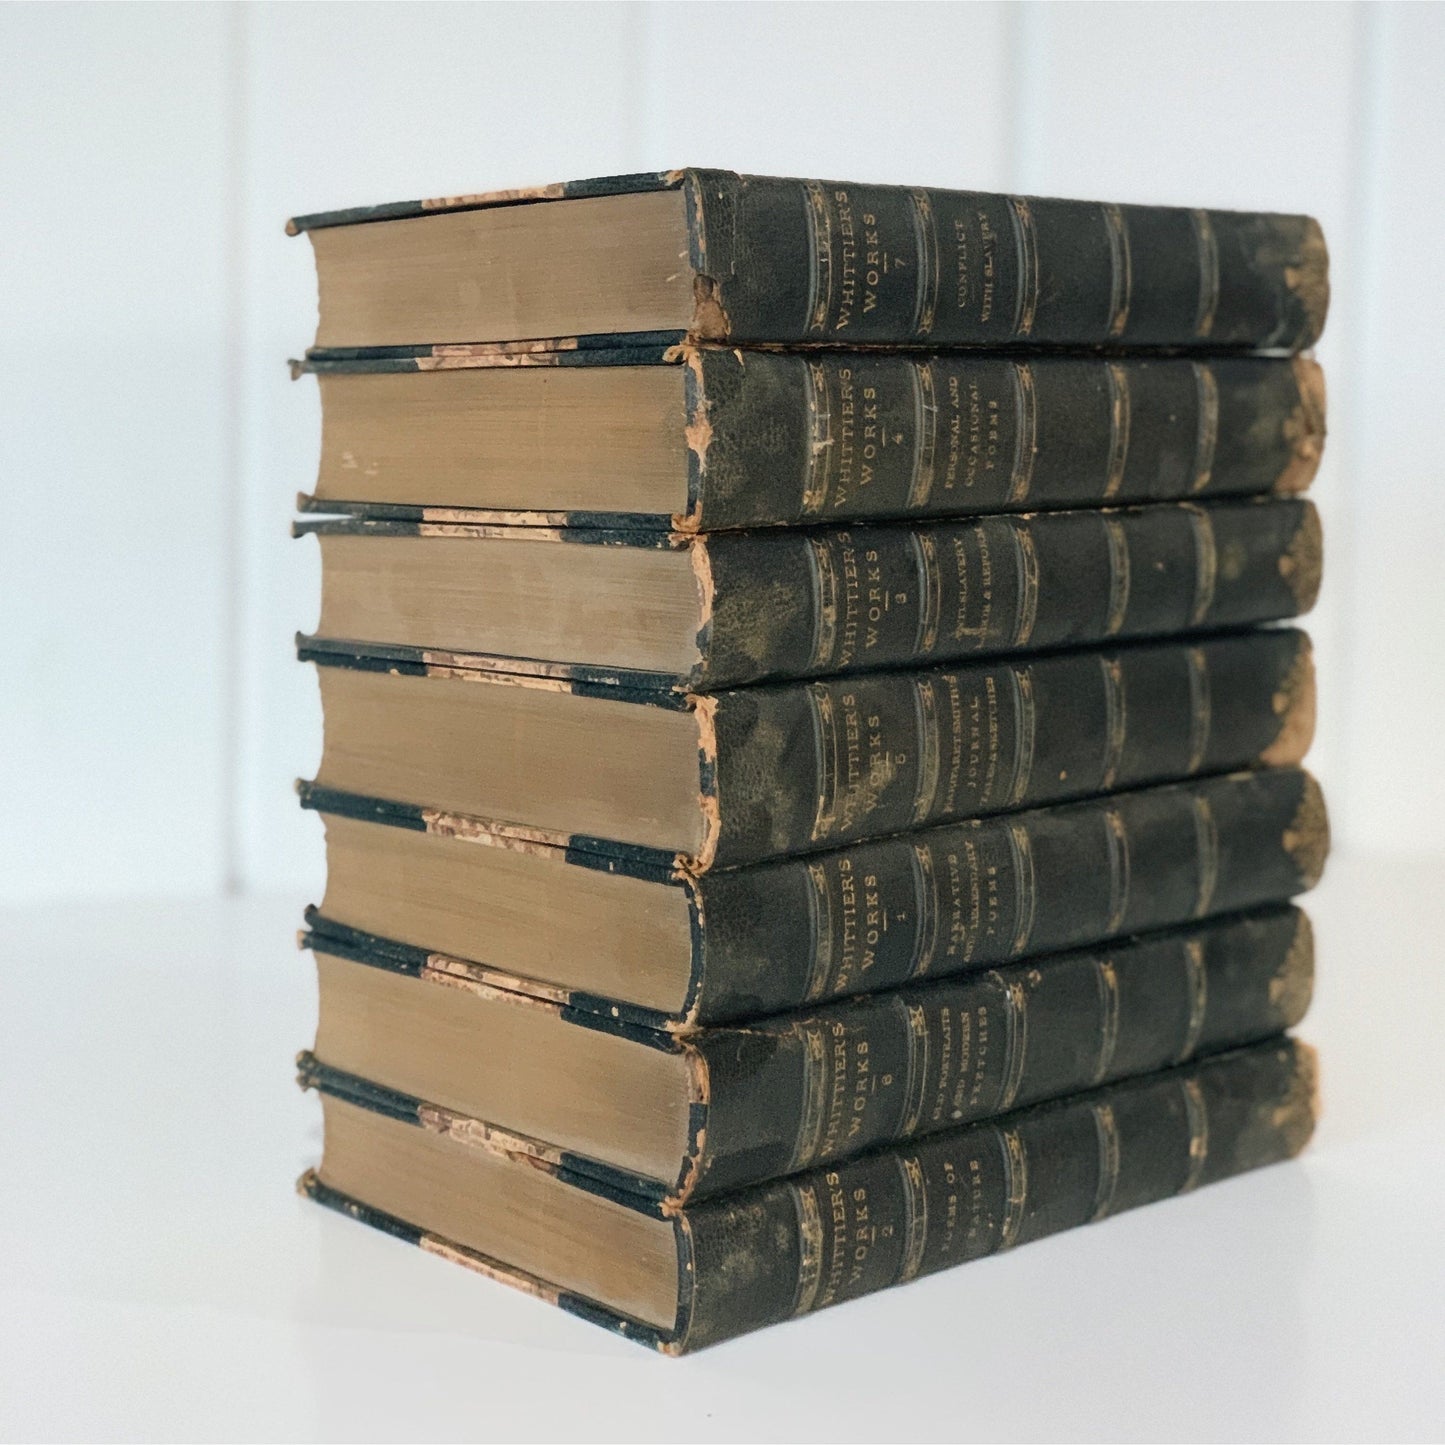 John Greenleaf Whittier In 7 volumes, Riverside Edition, 1894, Leather Antique Book Set